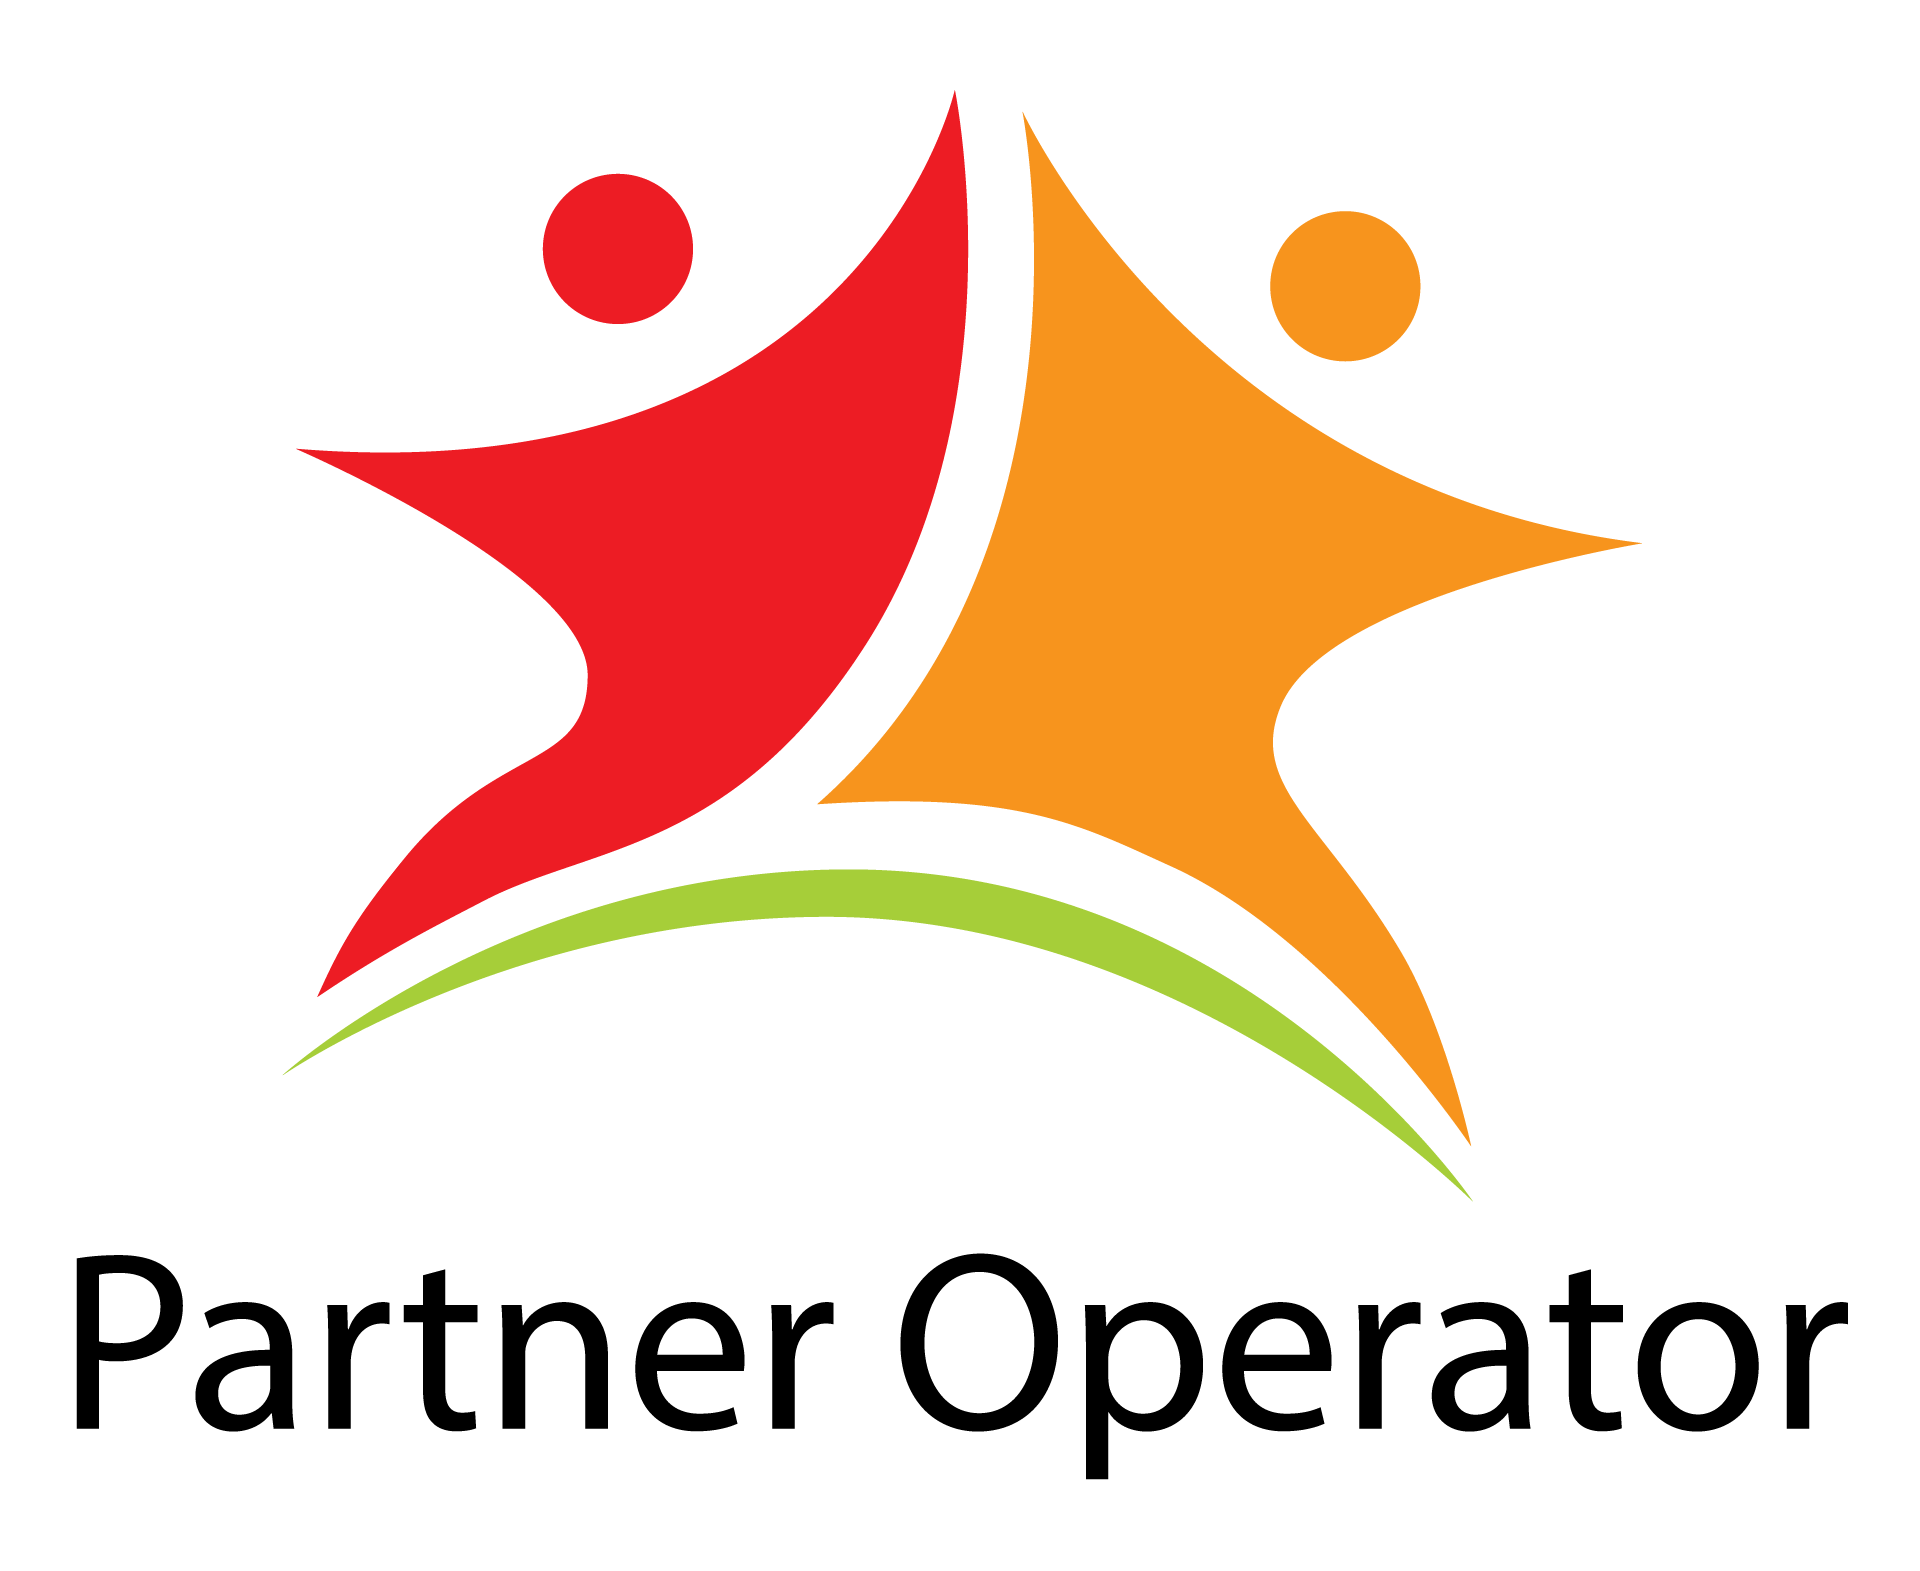 Partner Operator